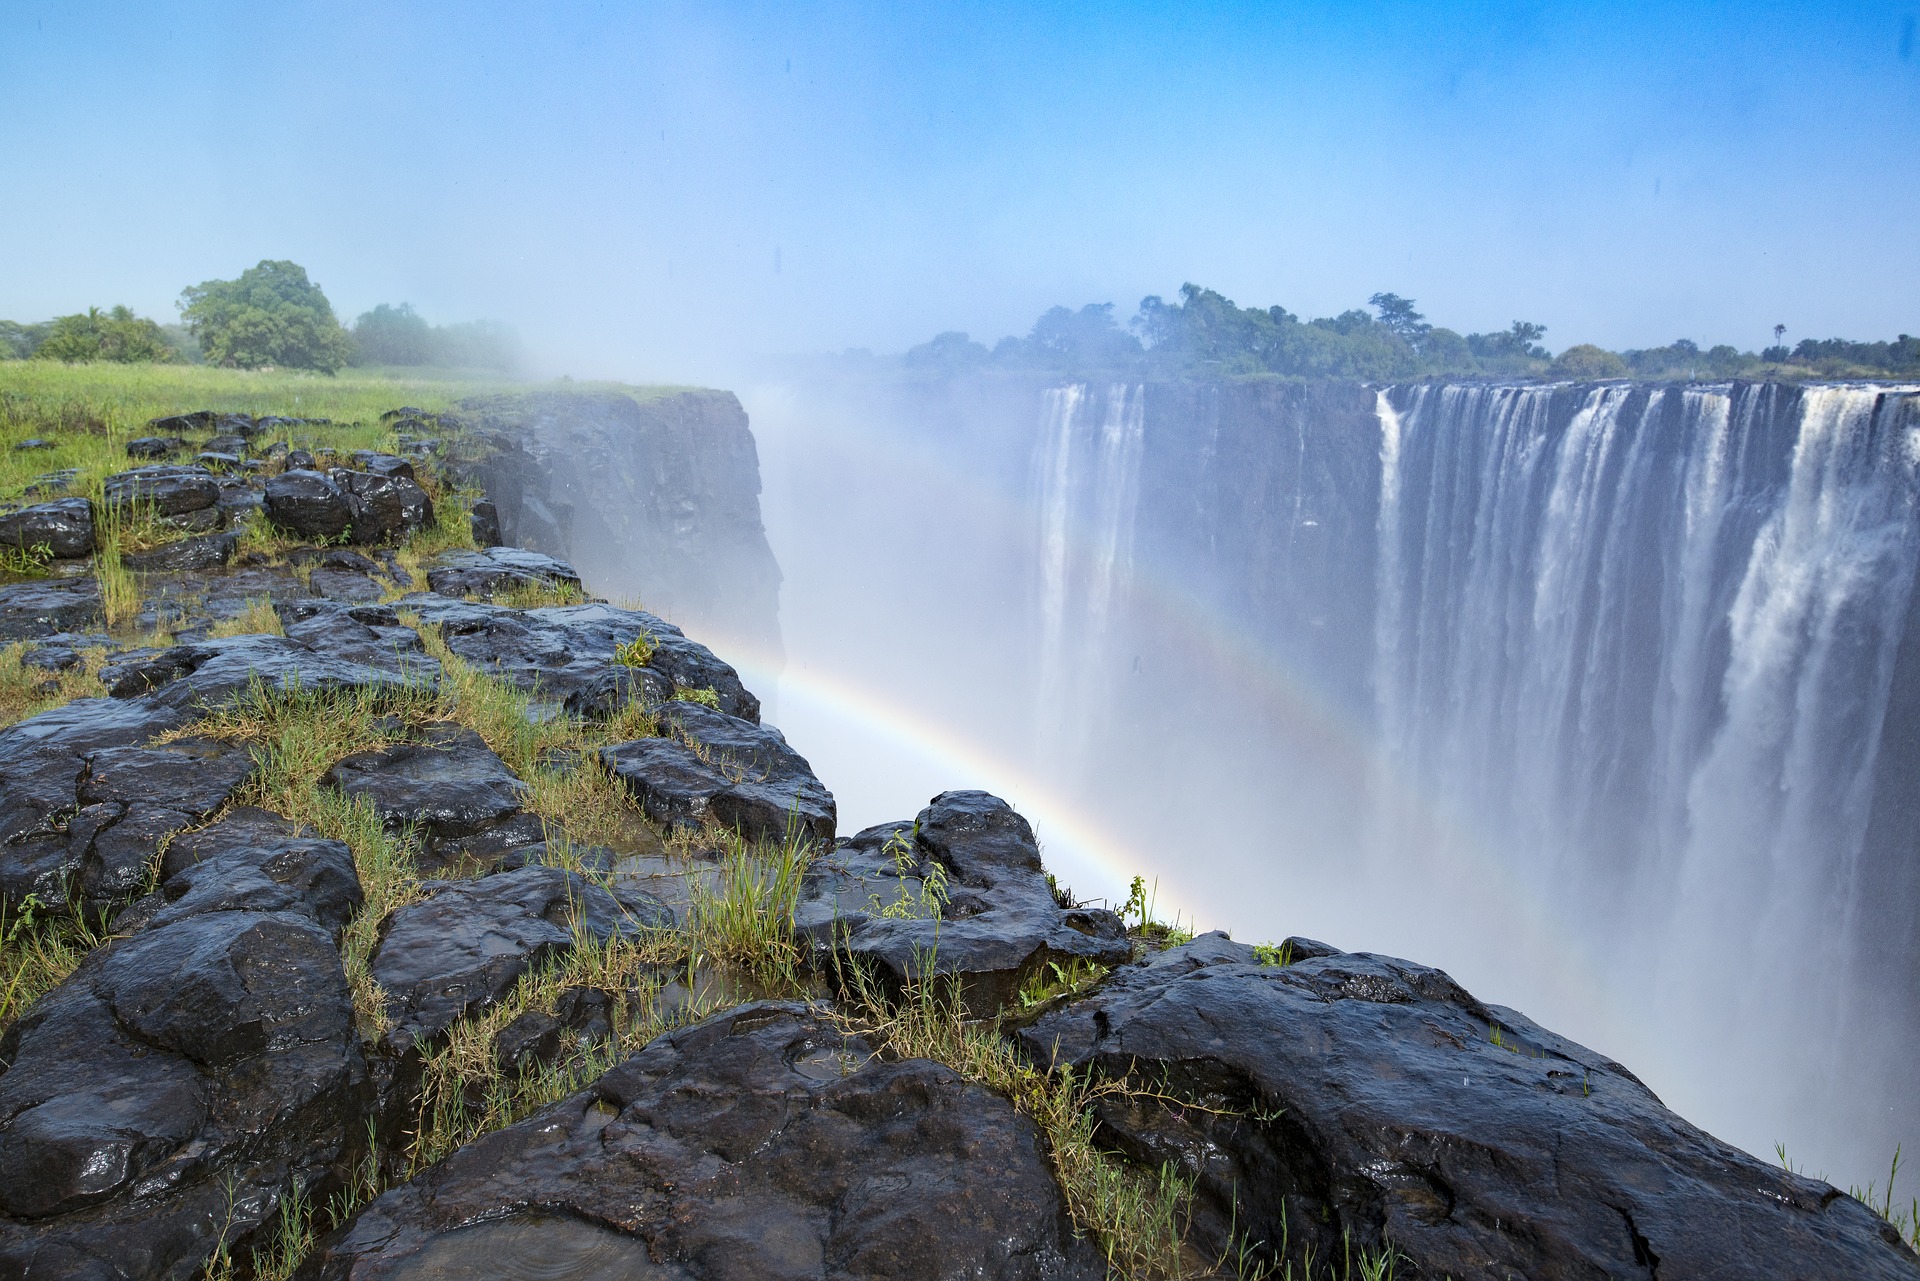 Rainbow over the amazing Victoria Falls in Zimbabwe